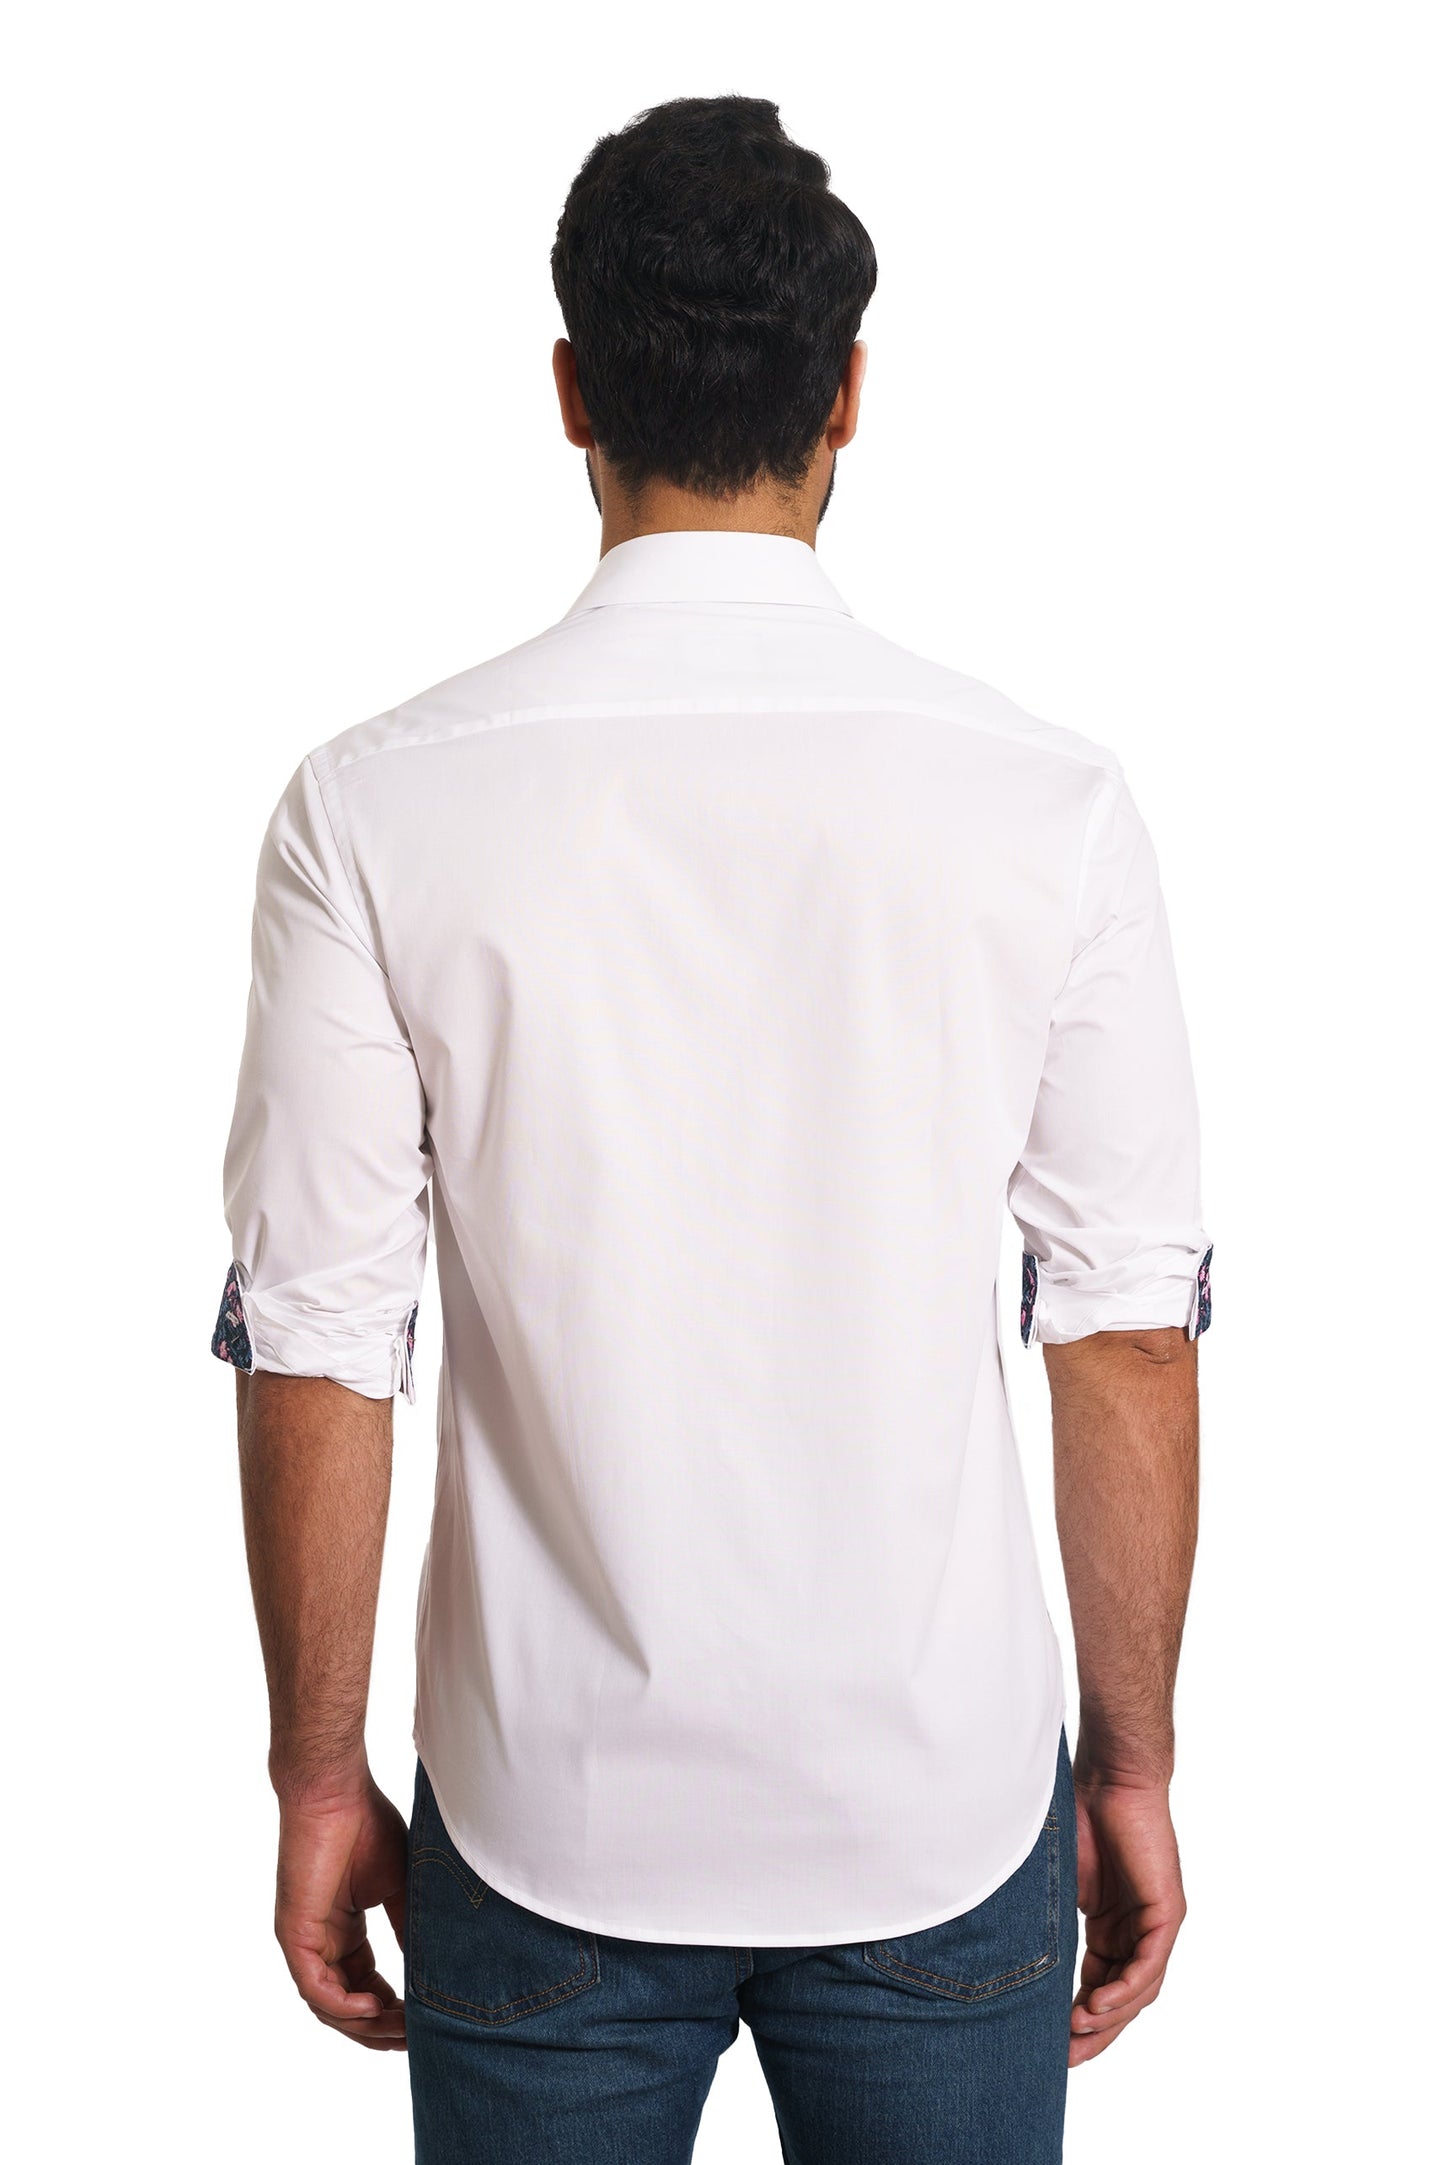 White Long Sleeve Shirt TP-7144 Back